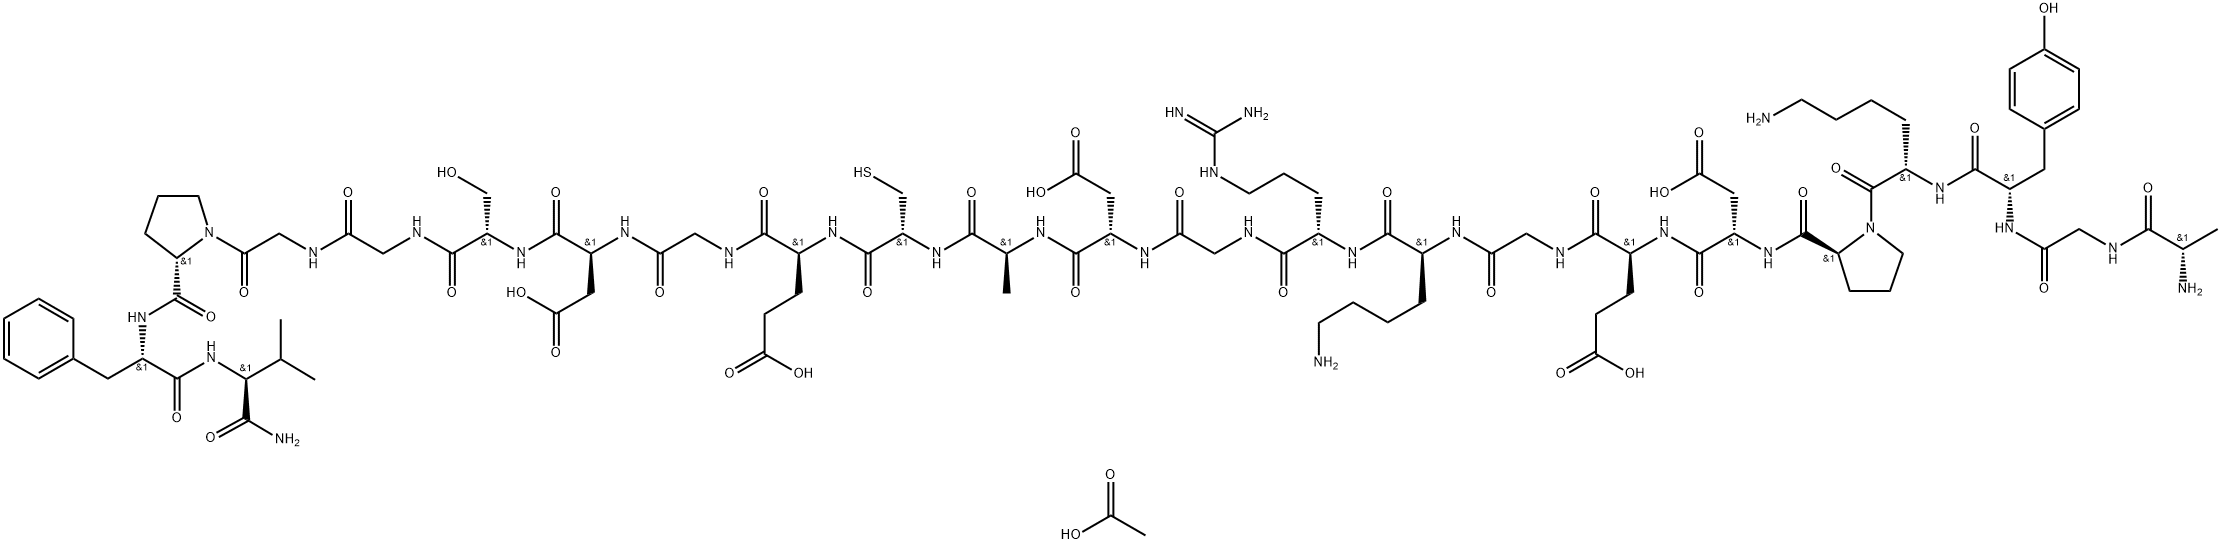 875455-82-6 Rusalatide Acetate